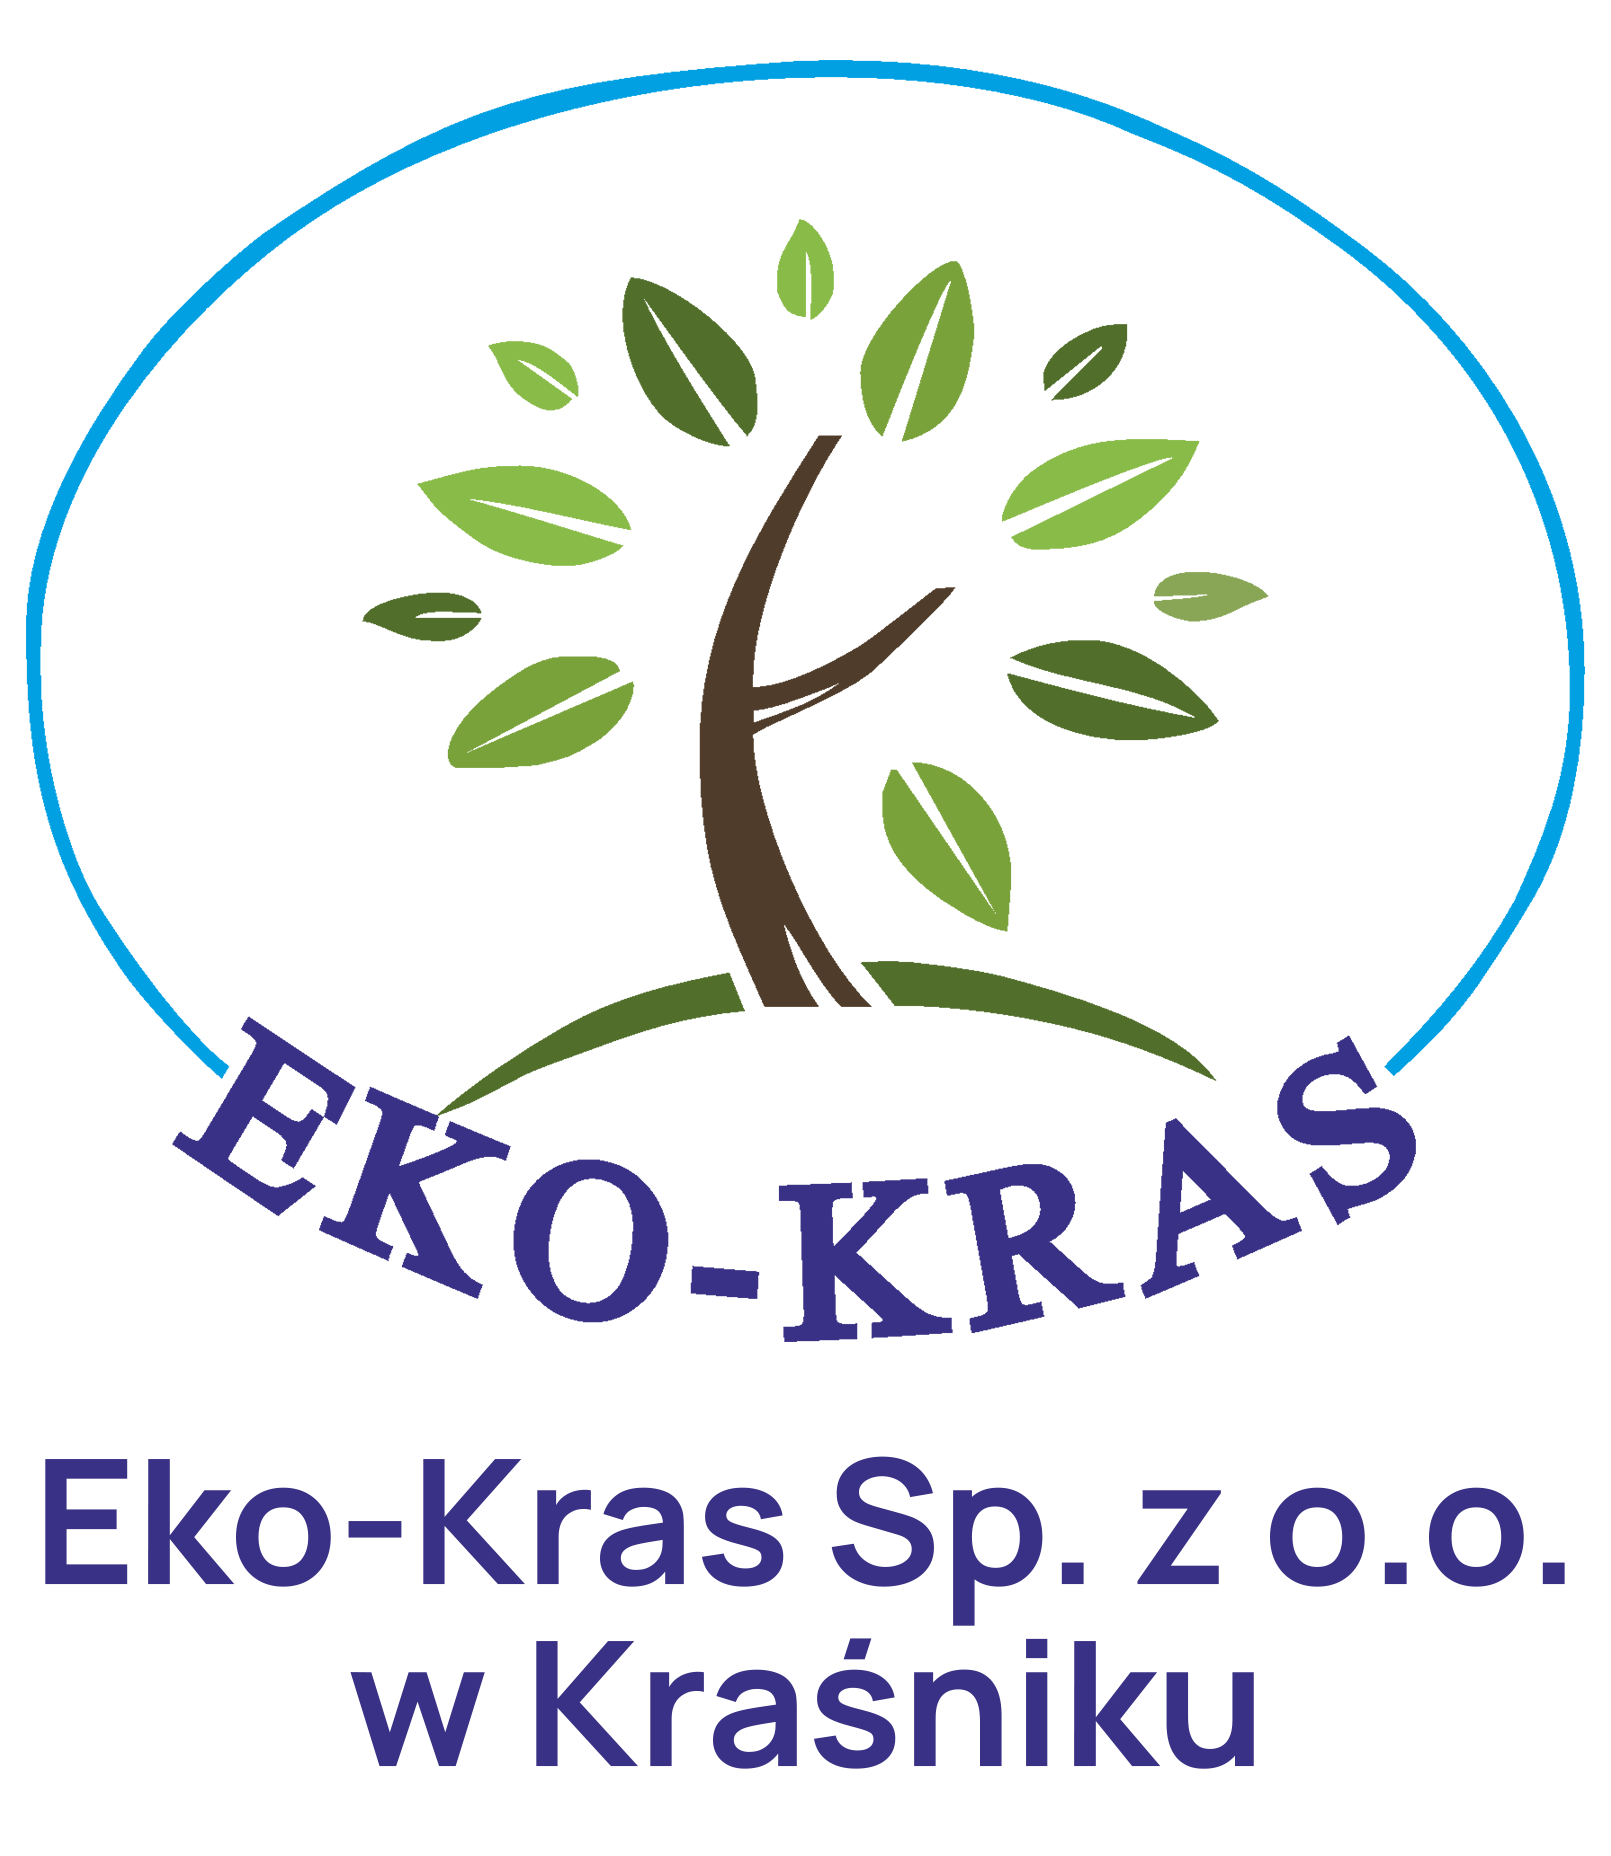 eko kras logo.